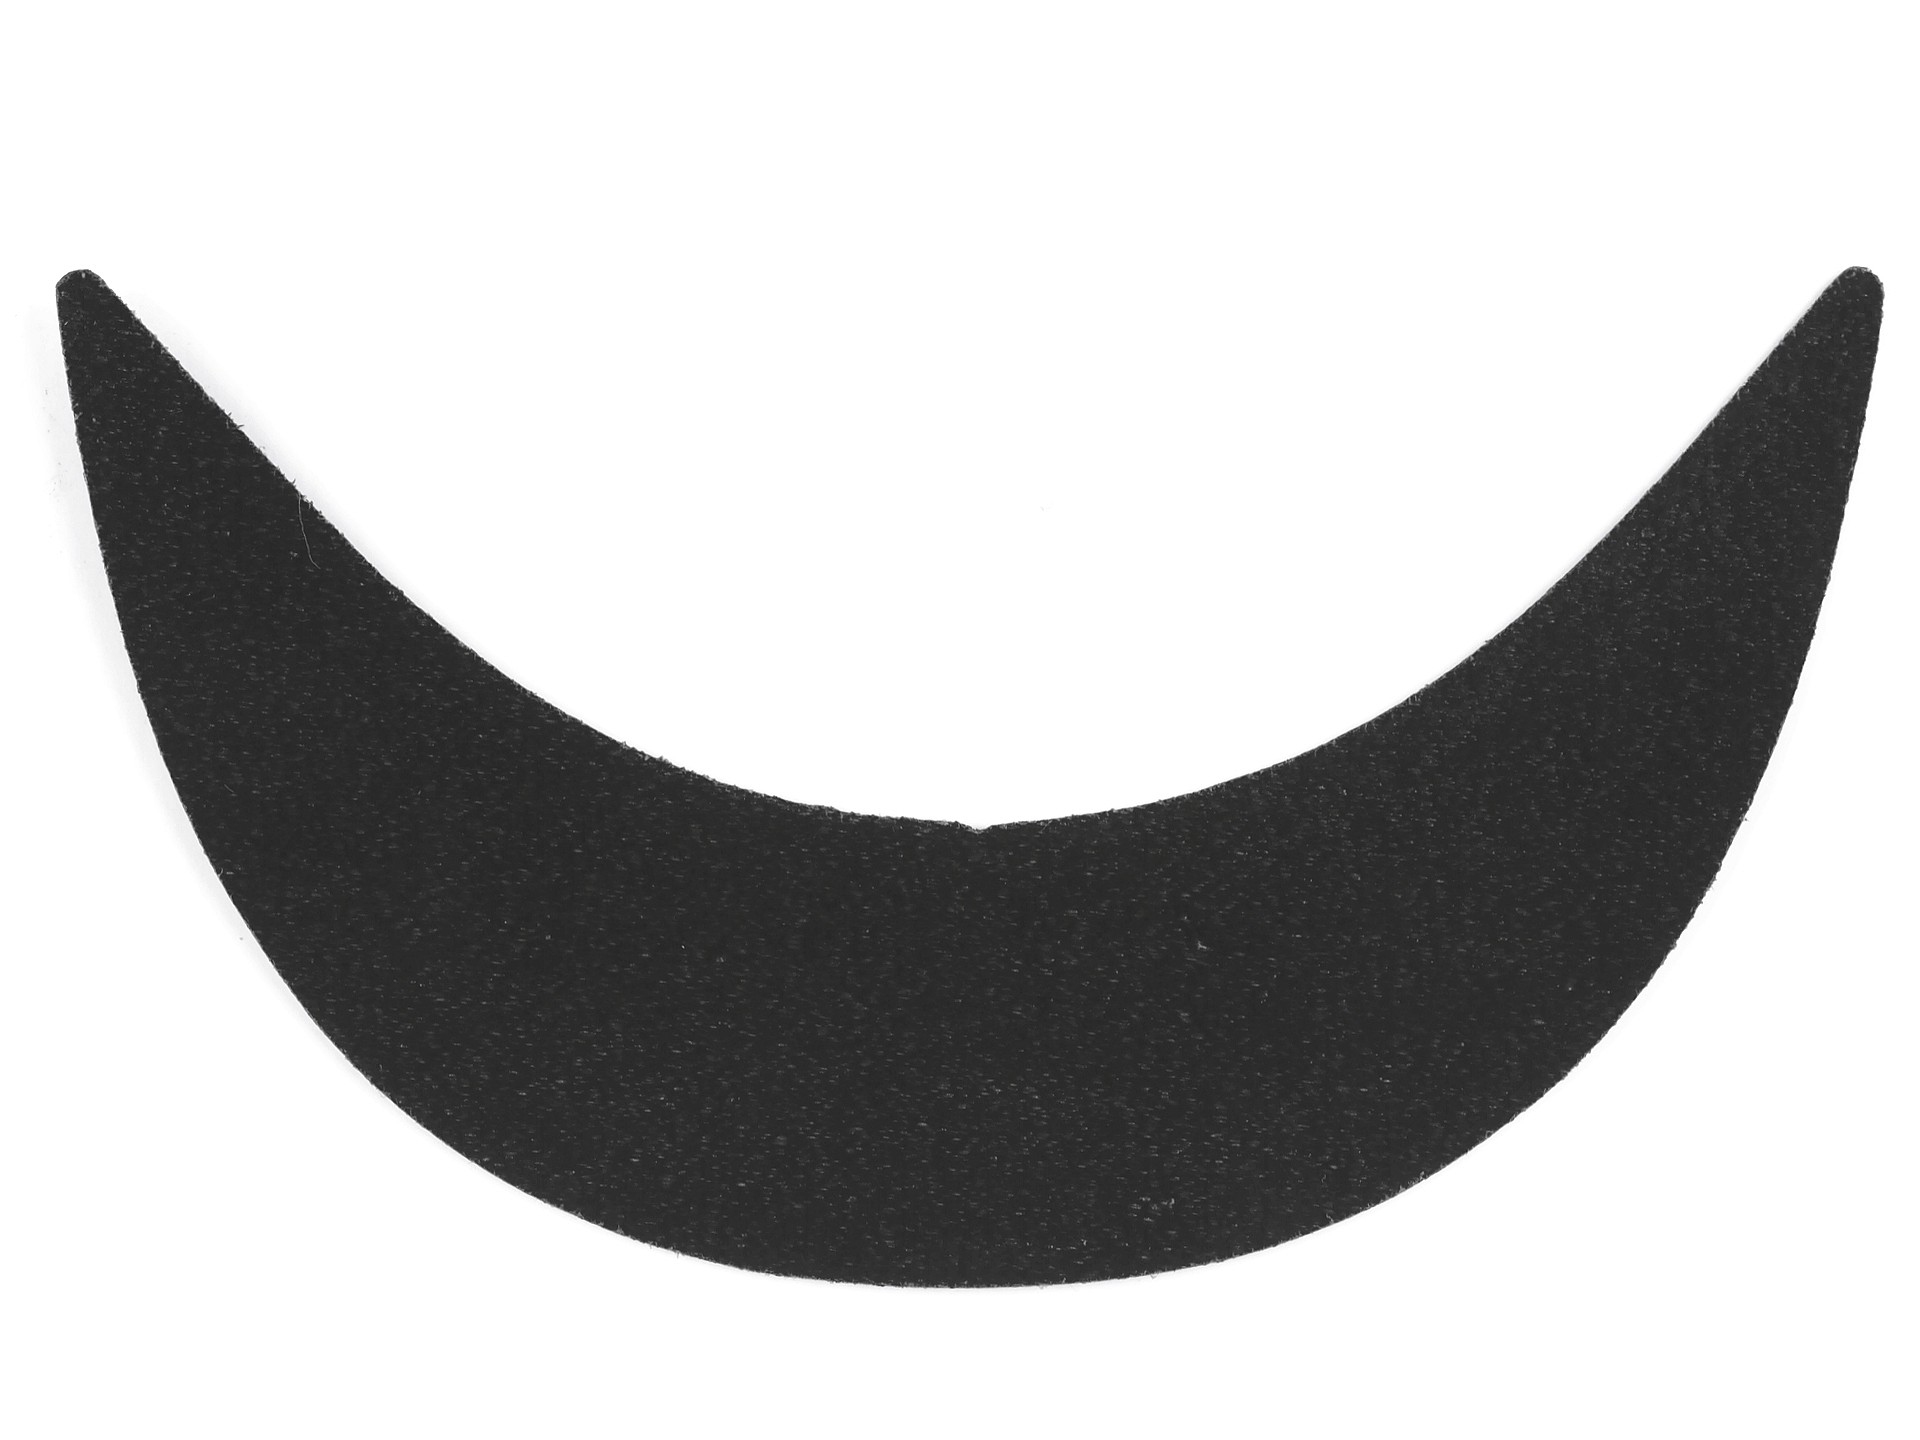 Cozoroc pentru Sepci, 4.5 x 10x 18 cm, Alb, Negru (10 bucati/pachet) Cod: 880020